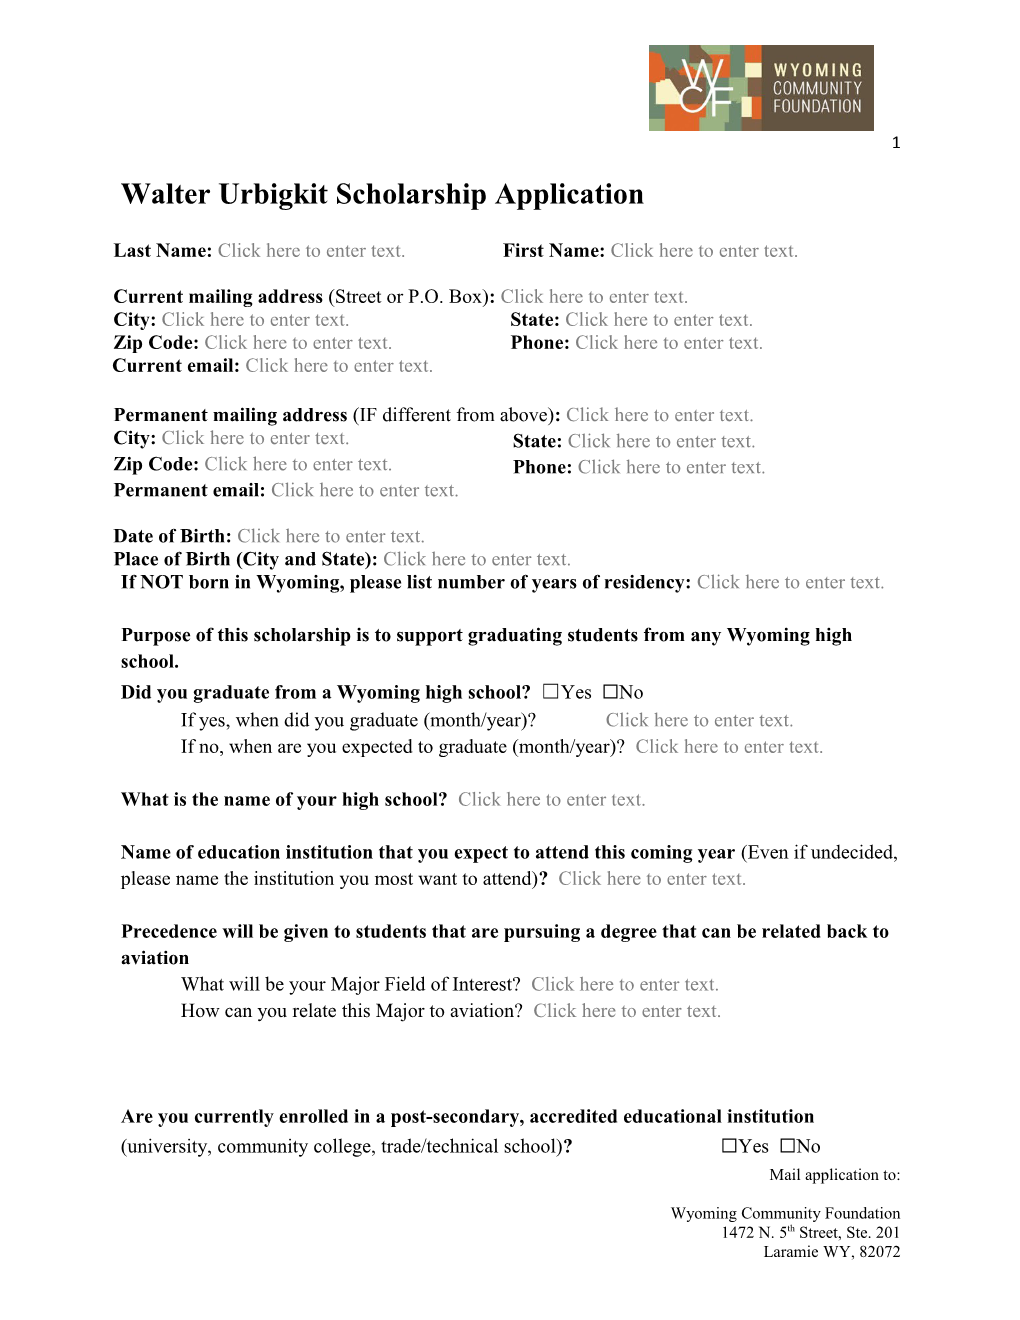 Walter Urbigkit Scholarship Application